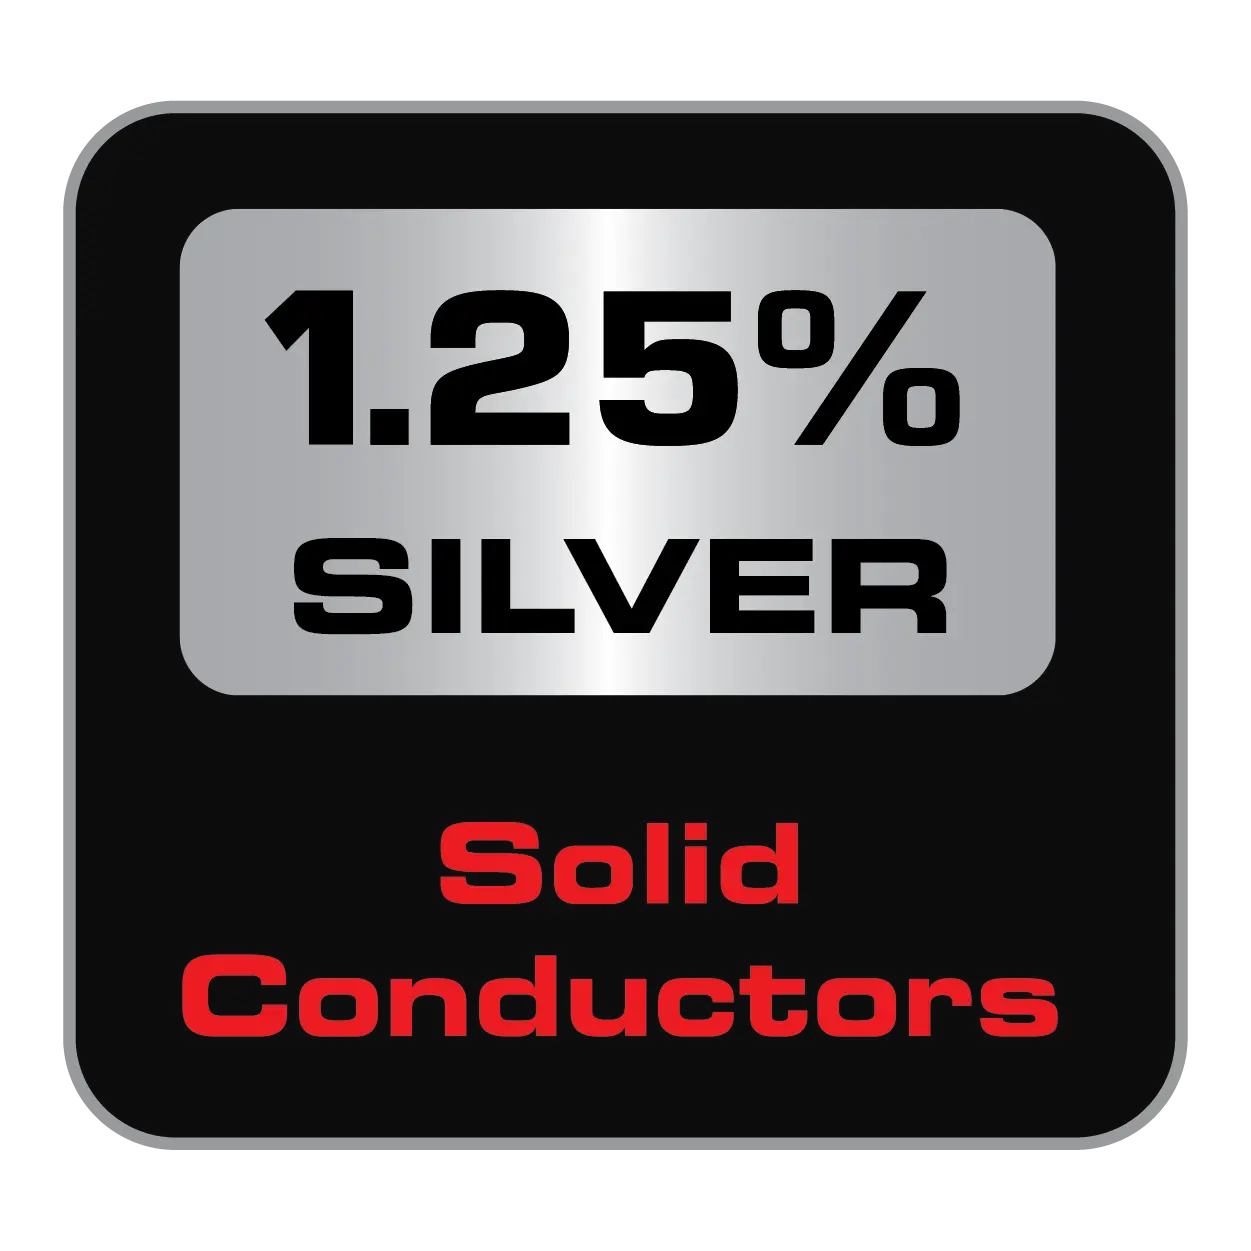 Audioquest 1.25% Silver Logo